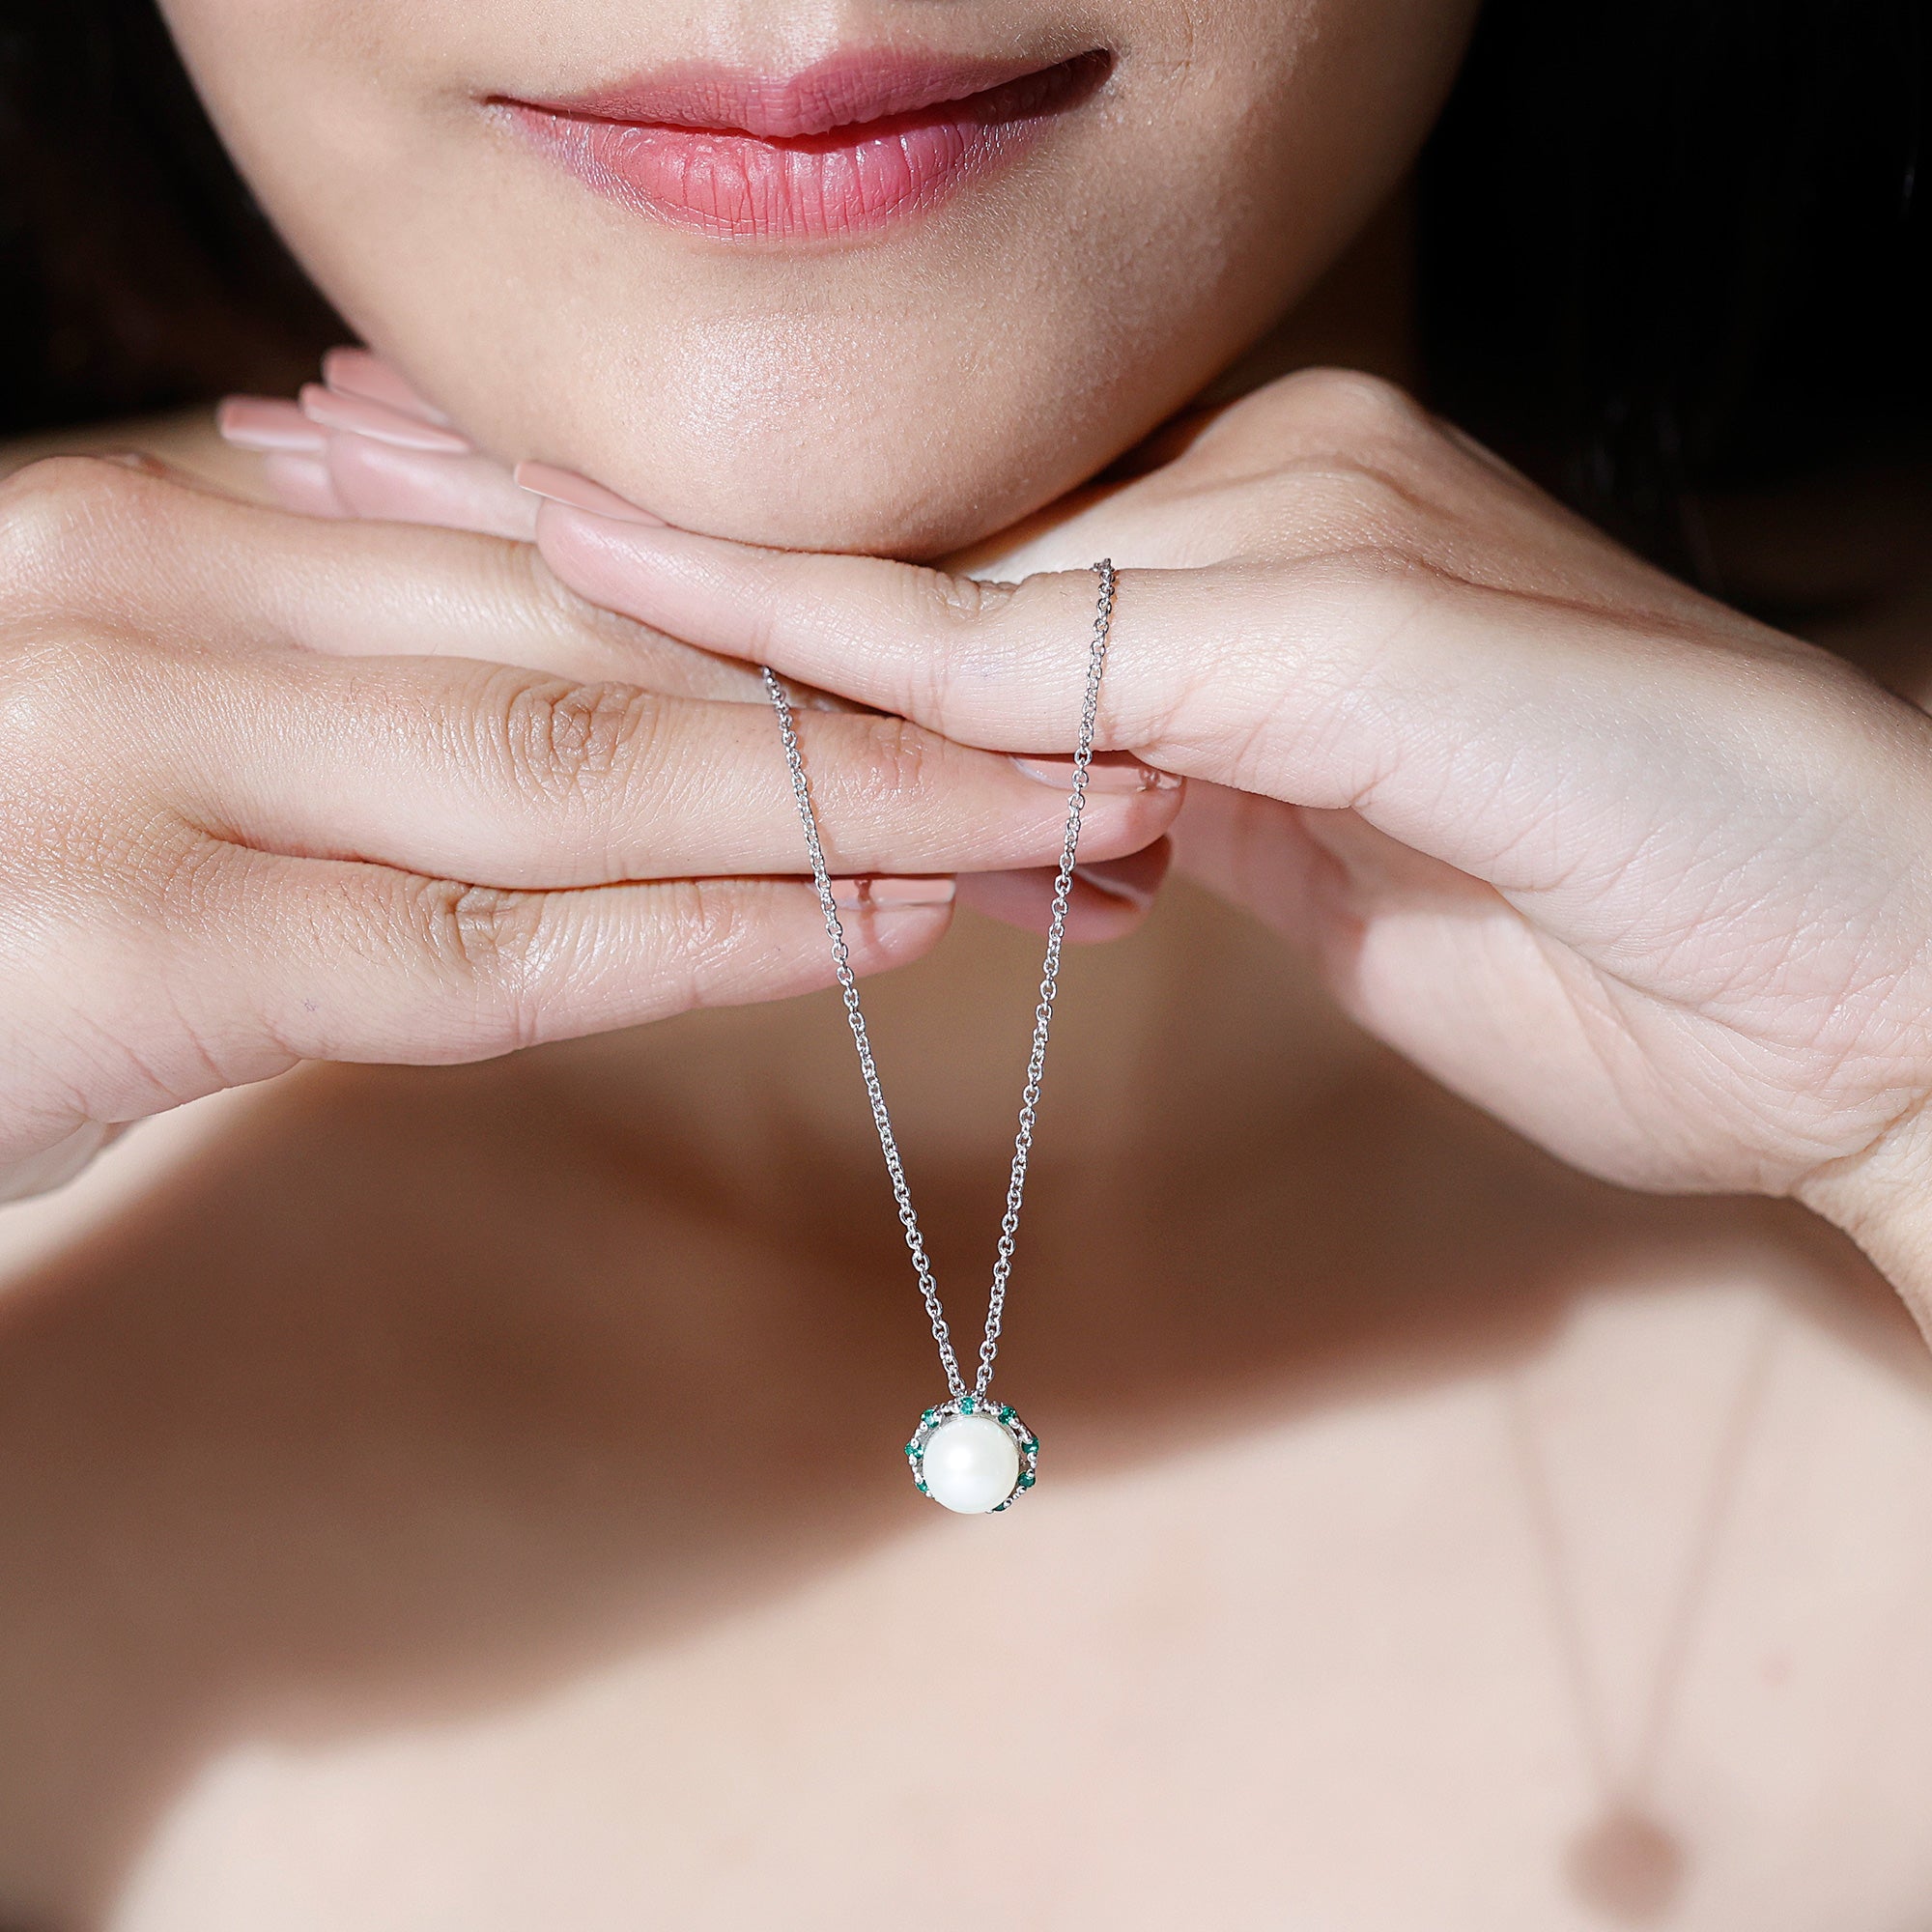 Vintage Style Freshwater Pearl Pendant with Created Emerald - Arisha Jewels